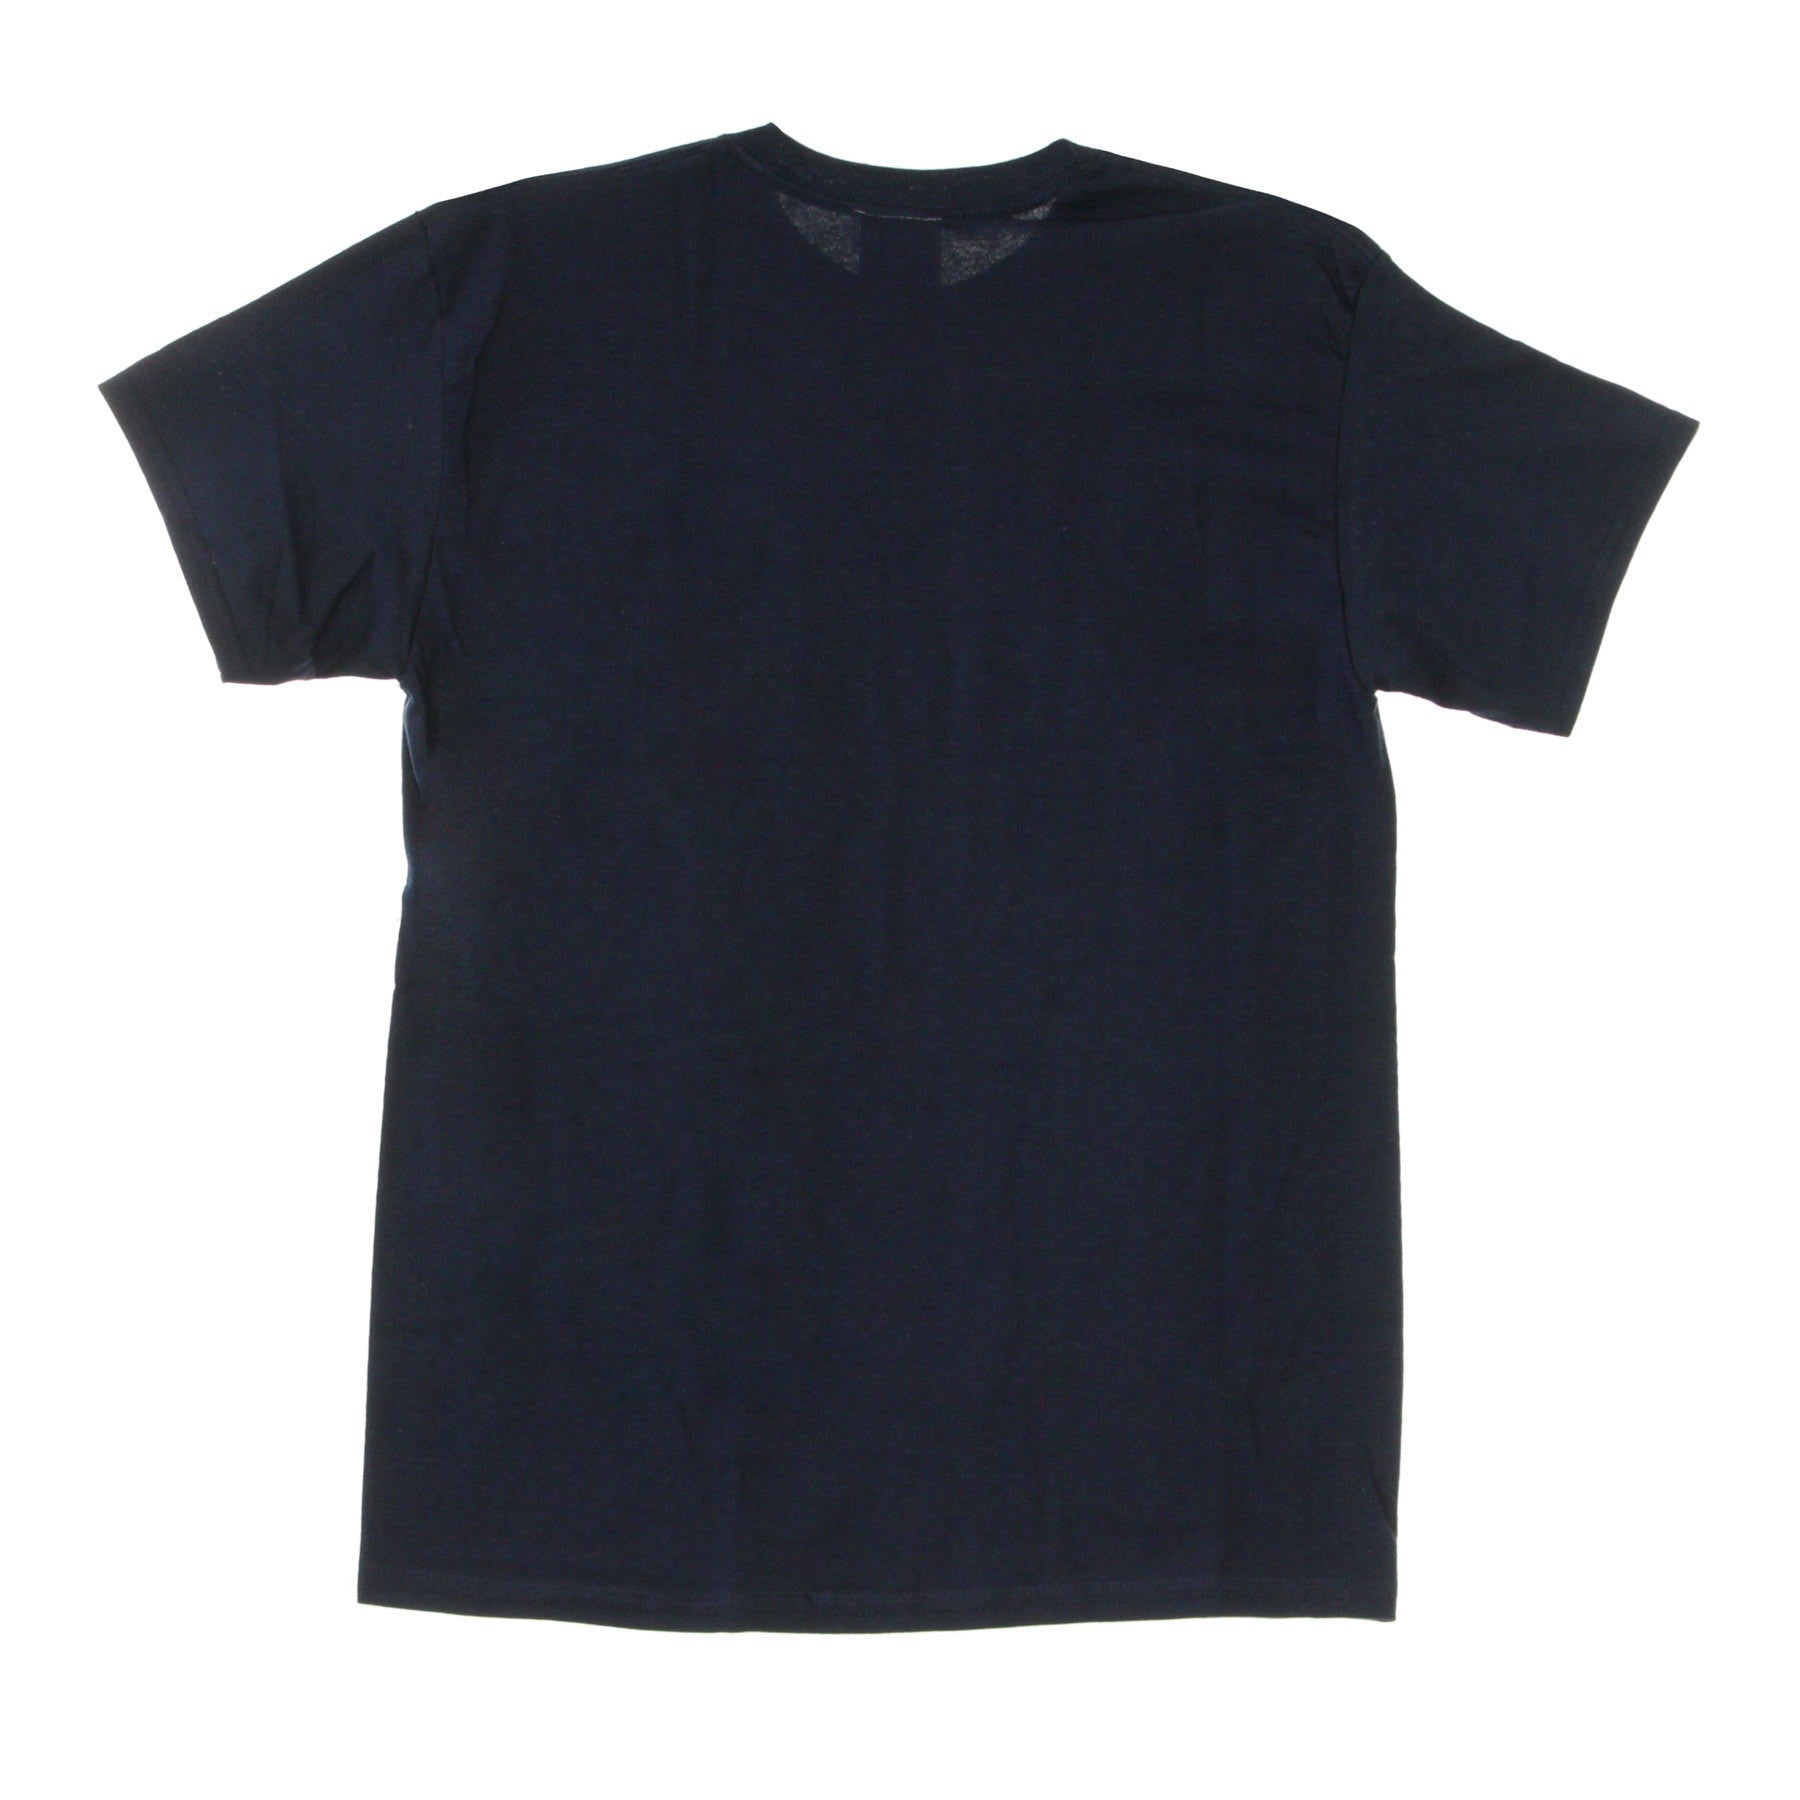 Black Ice Tee Navy Blue Men's T-Shirt